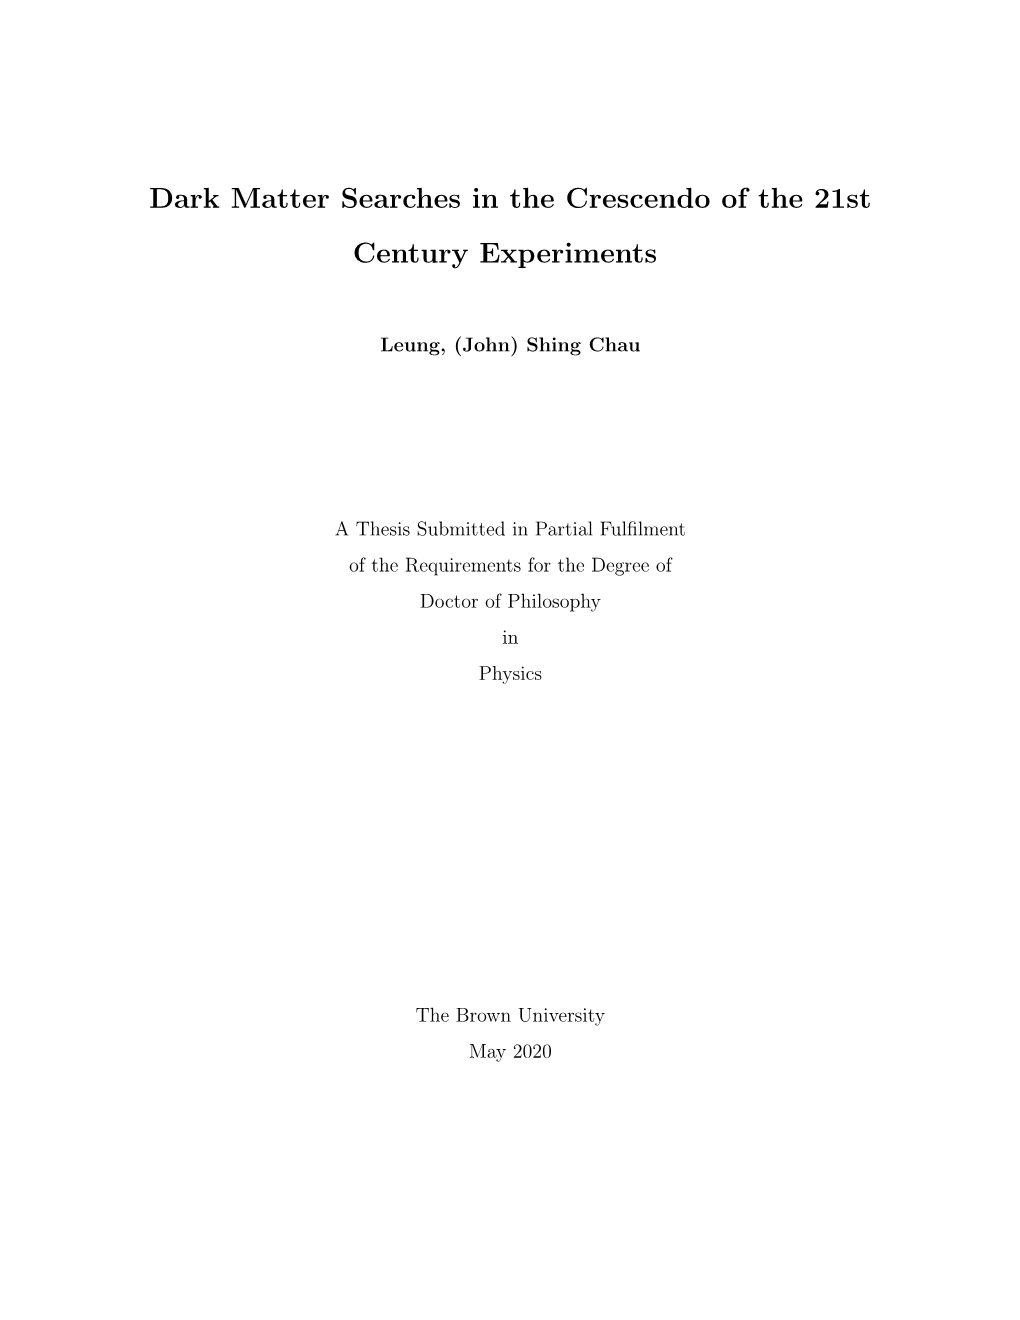 Dark Matter Searches in the Crescendo of the 21St Century Experiments